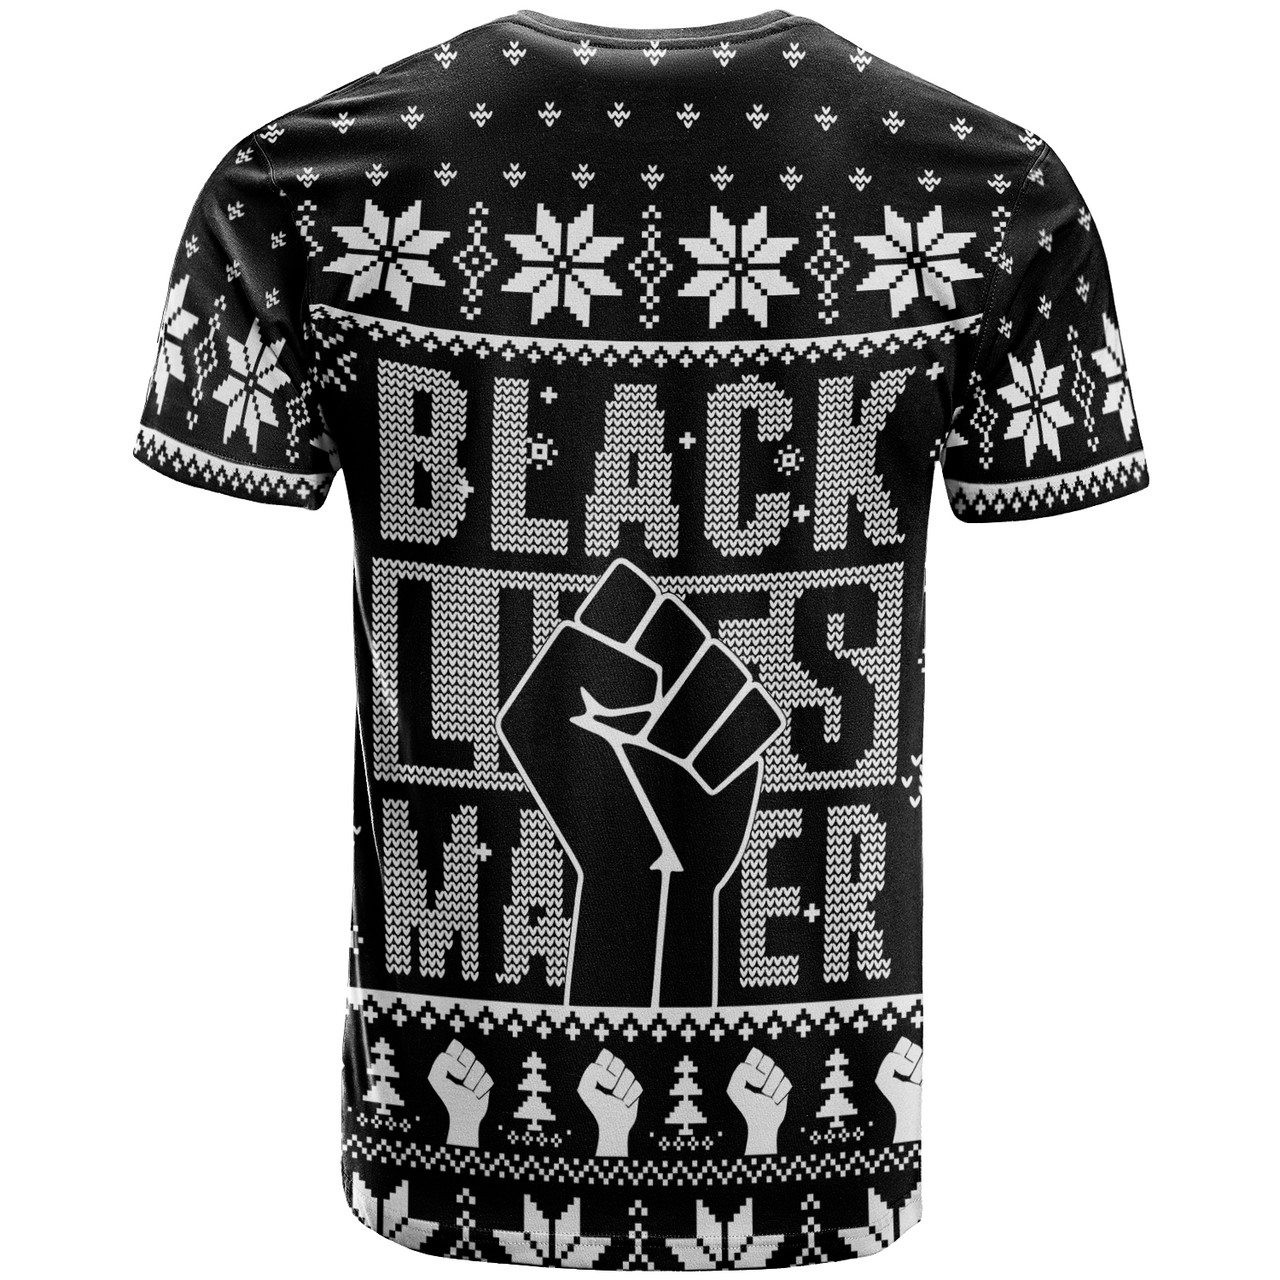 African T-shirt - BLM Christmas Style T-shirt